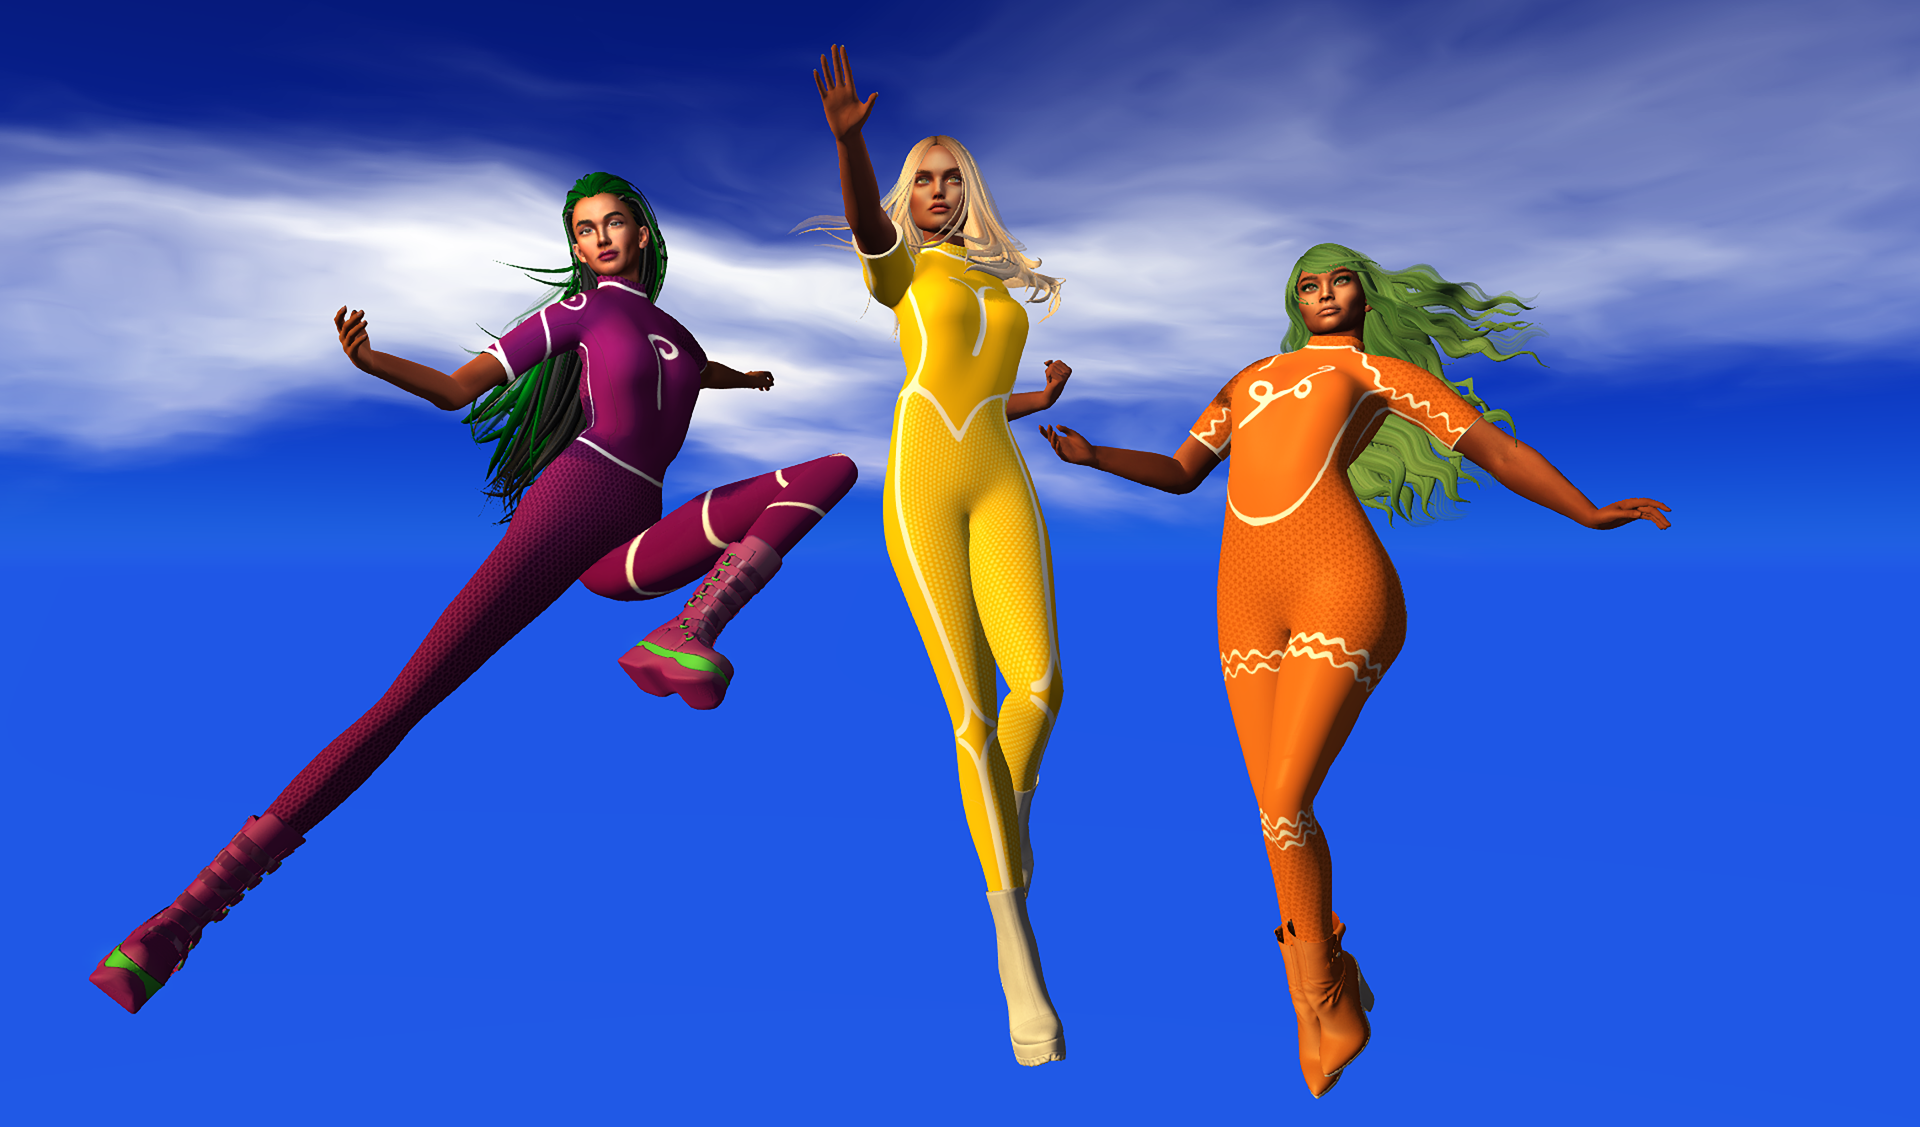 A digital image of three superheroines flying in a blue sky